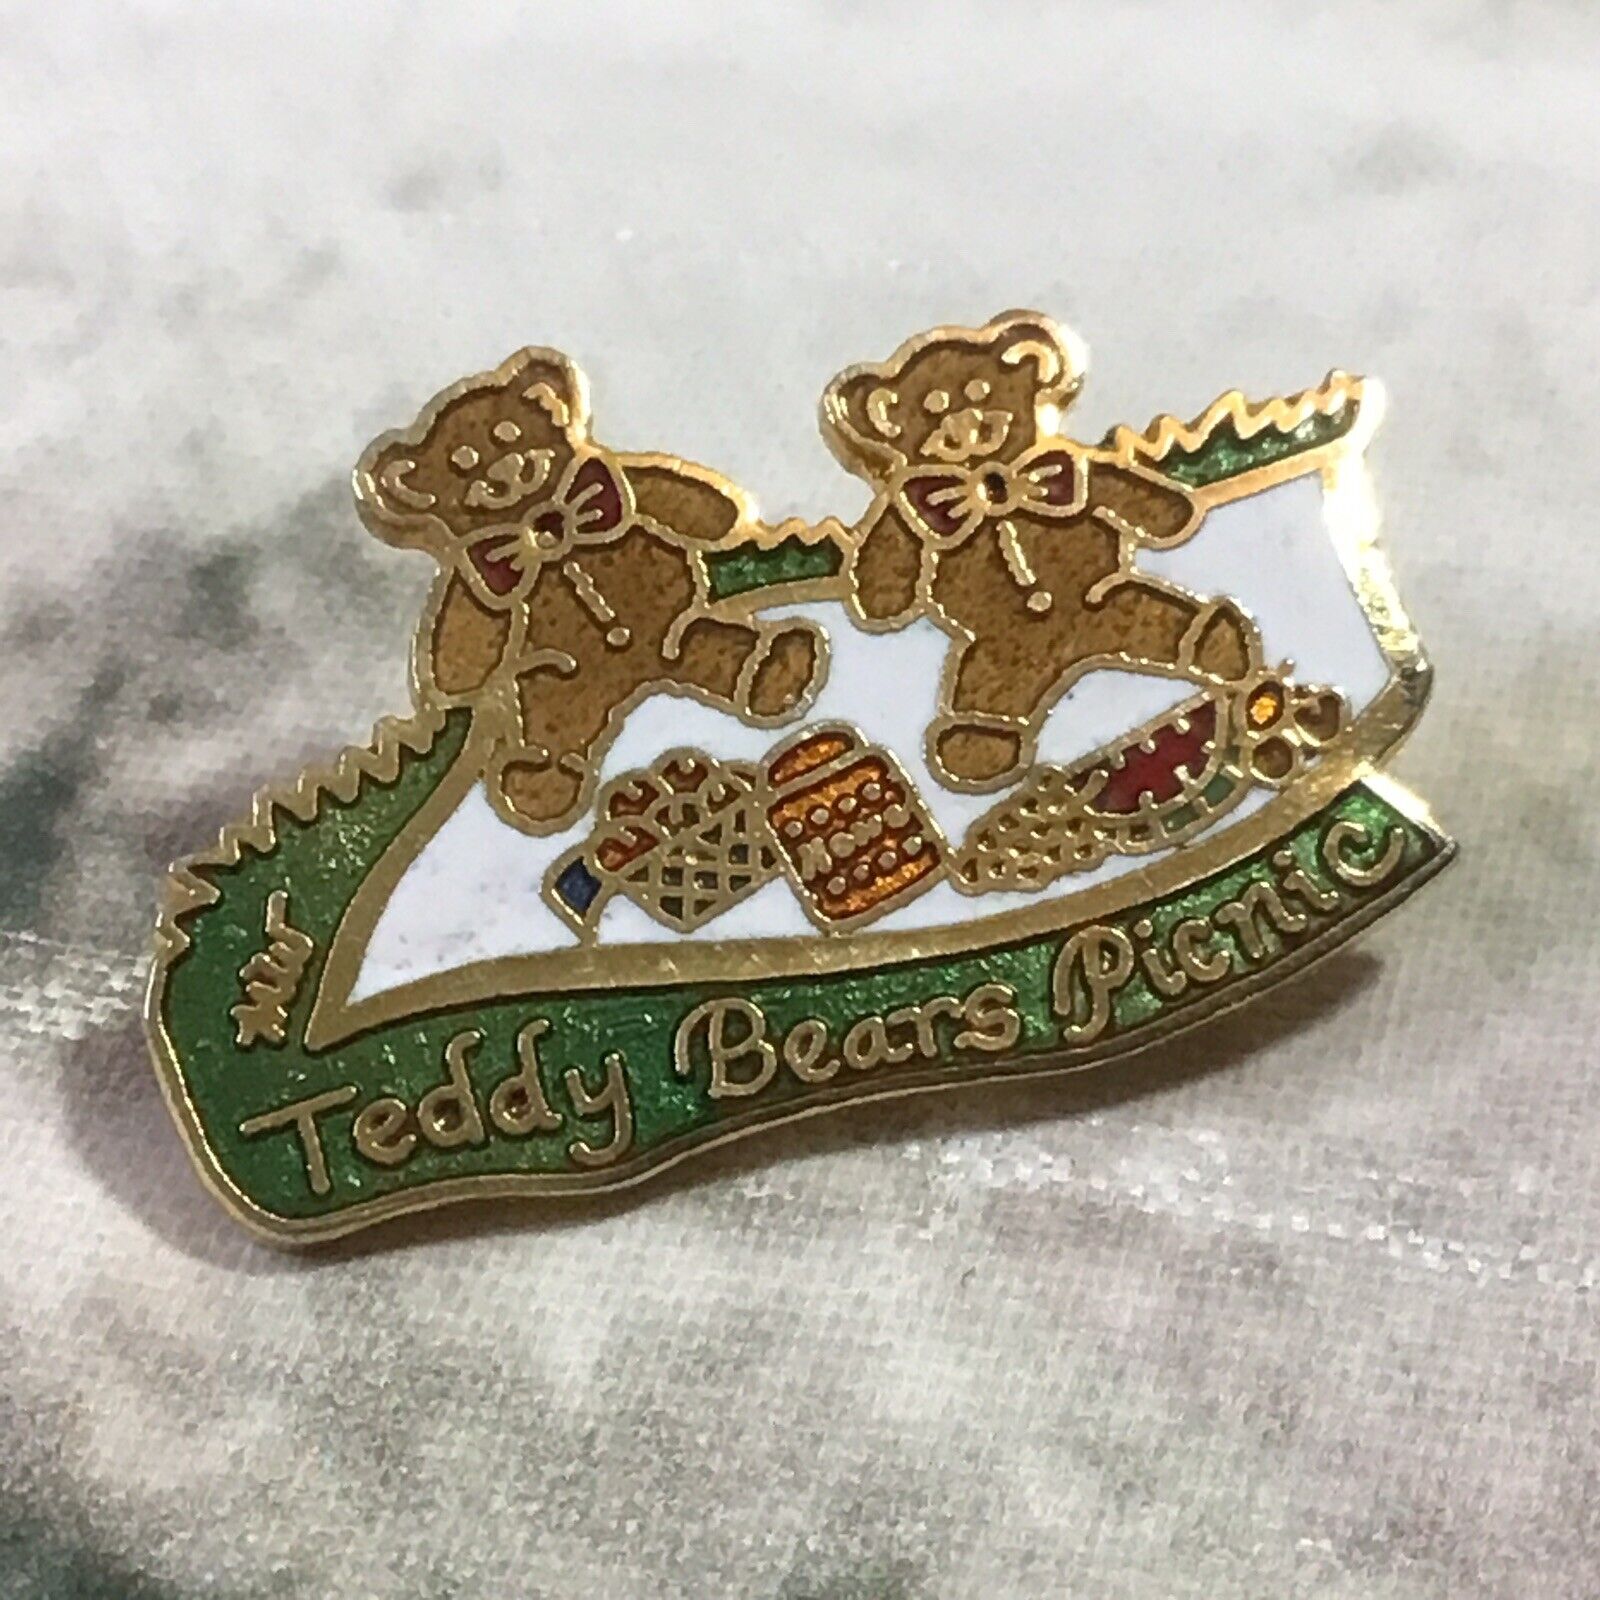 Vintage Teddy Bears Picnic Lapel Pin Metal 1” Collectible Brooch